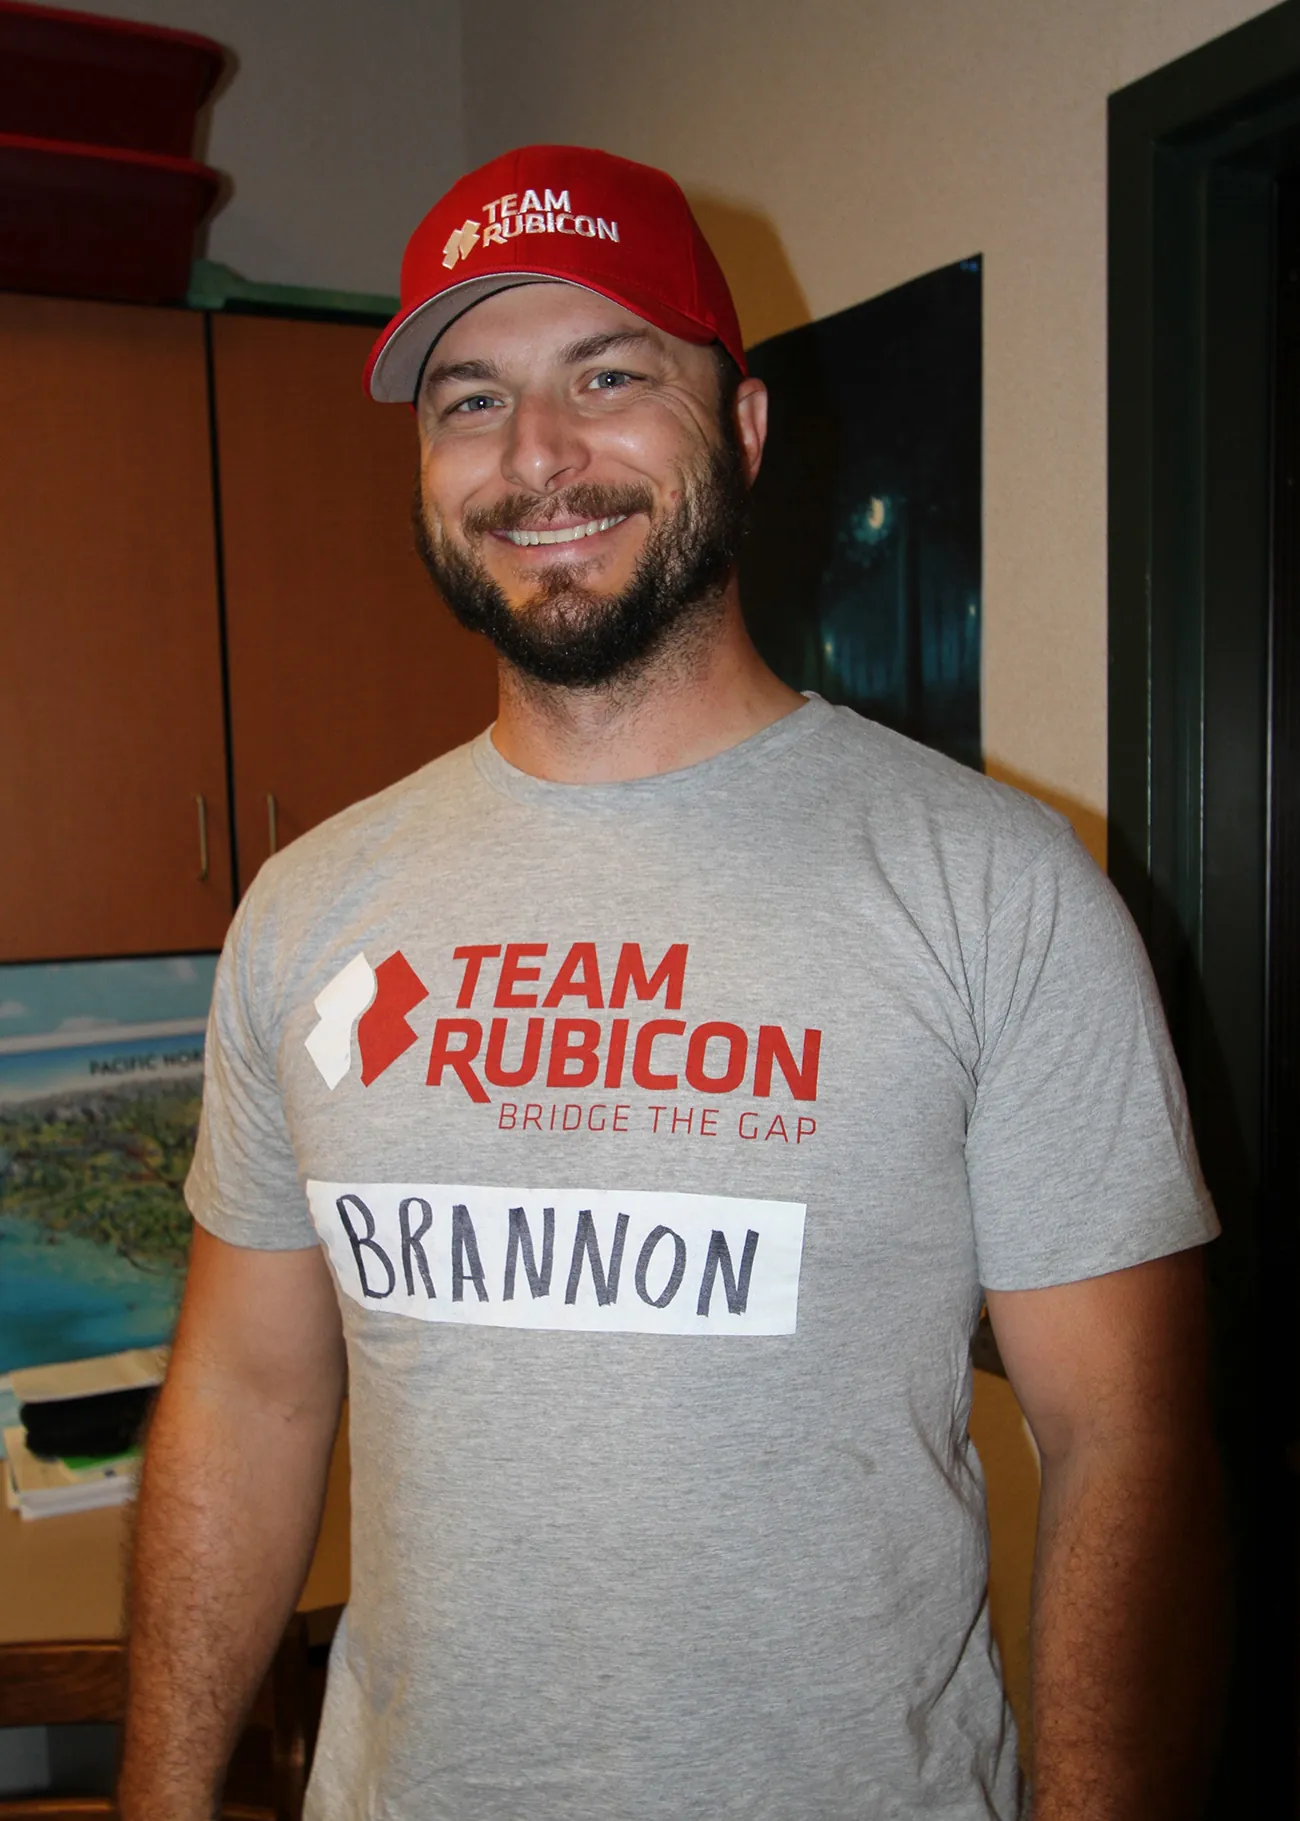 Photograph shows a man wearing a Team Rubicon hat, and Team Rubicon shirt.